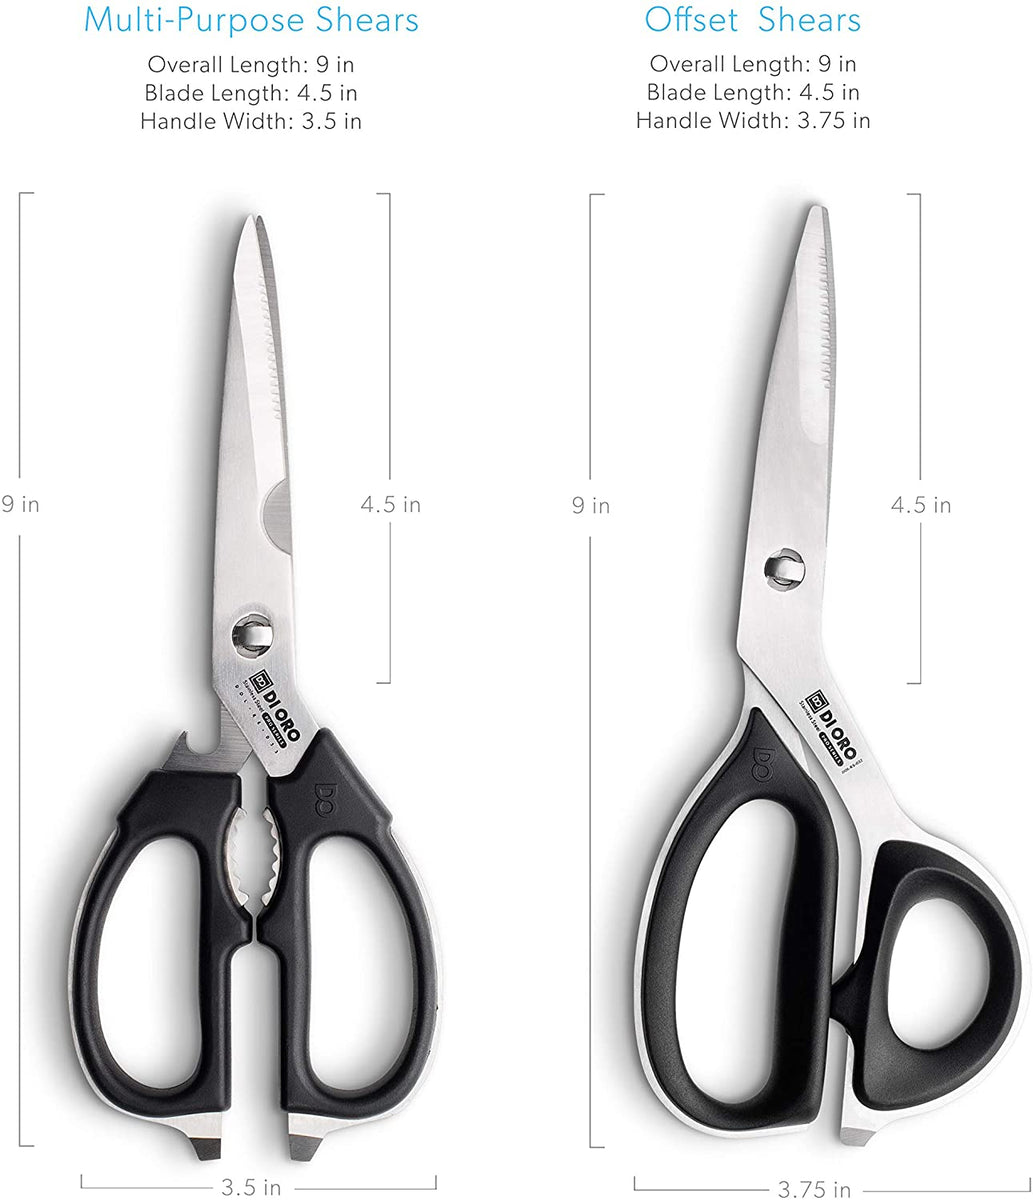 Dalstrong Professional Kitchen Scissors - 420J2 Comoros